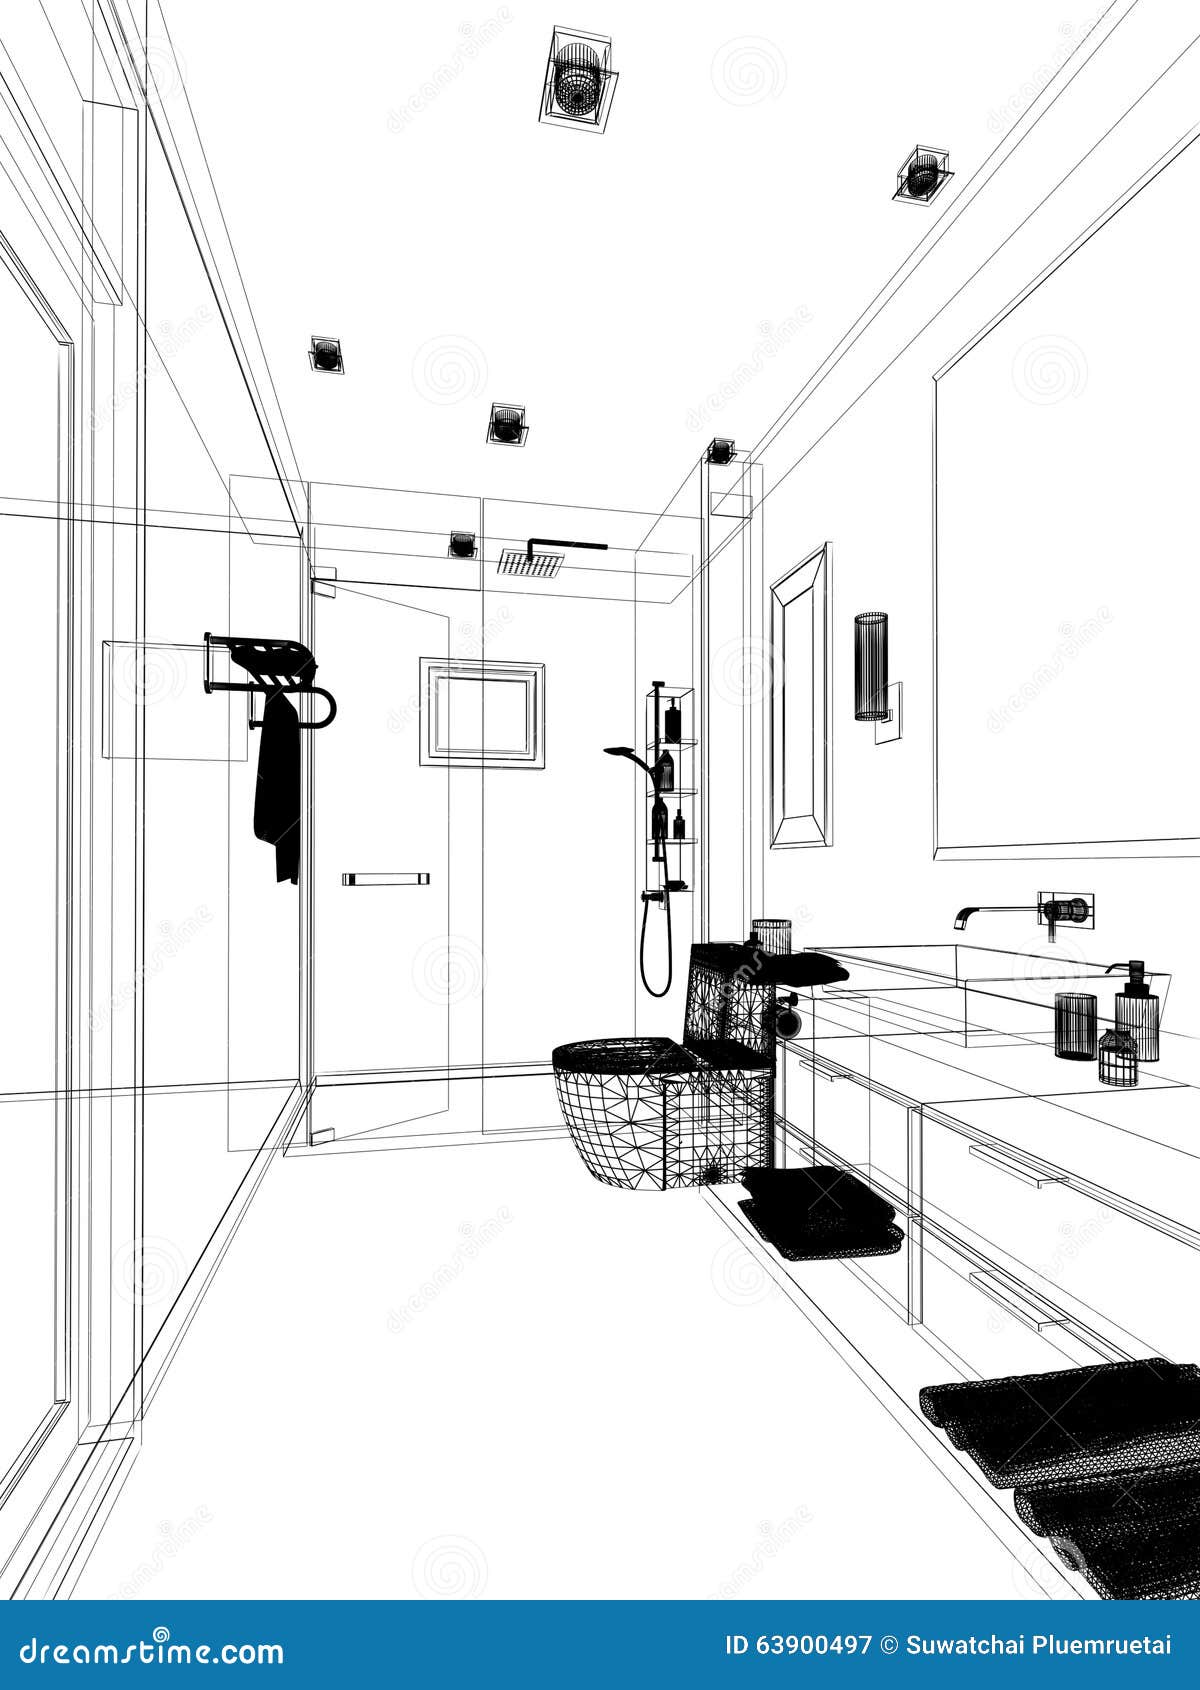 Sketch Of The Bathroom DB5 | Interior design sketches, Architecture bathroom,  Home design plans